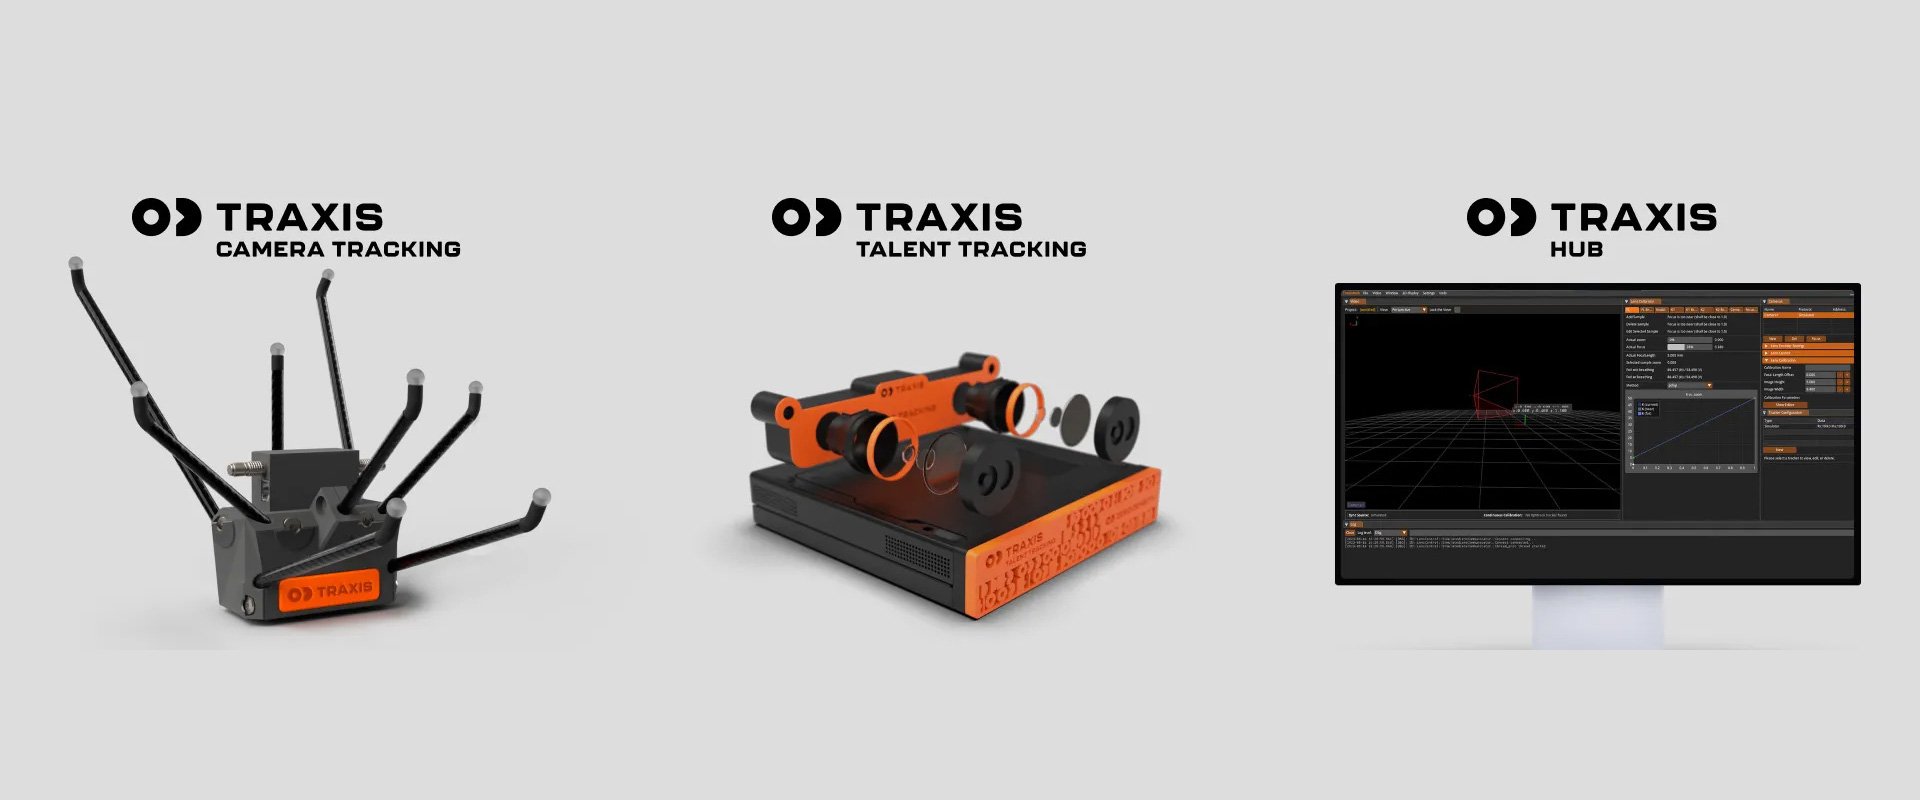 Traxis-Tracking-Platform-1